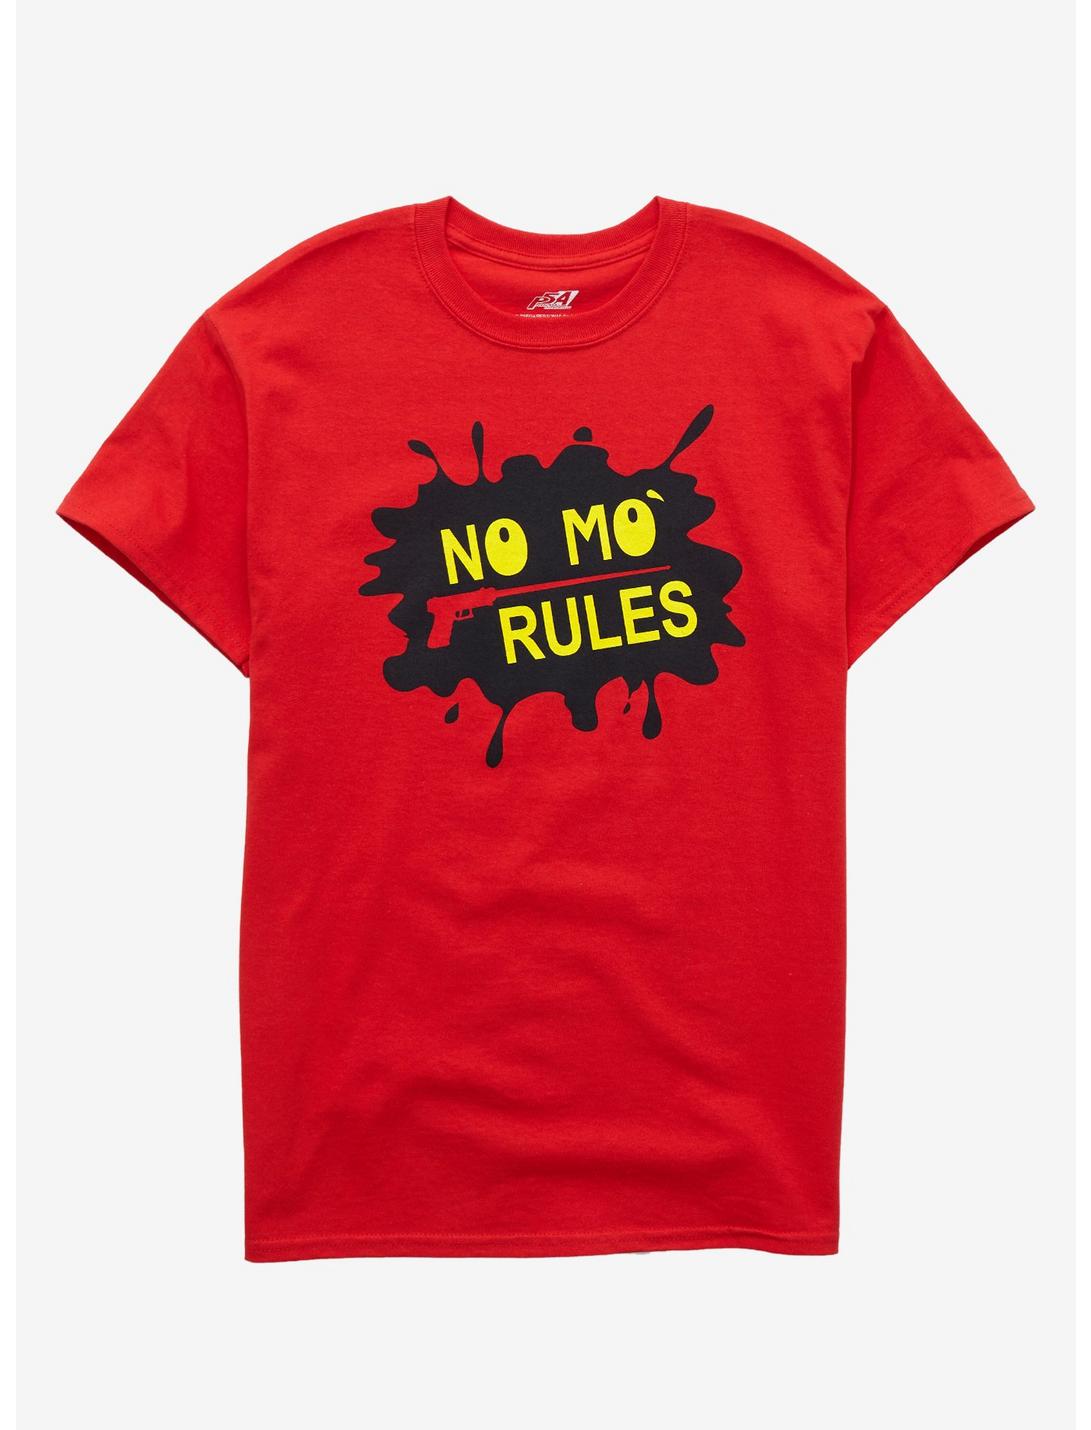 Persona 5 No Mo' Rules T-Shirt, RED, hi-res